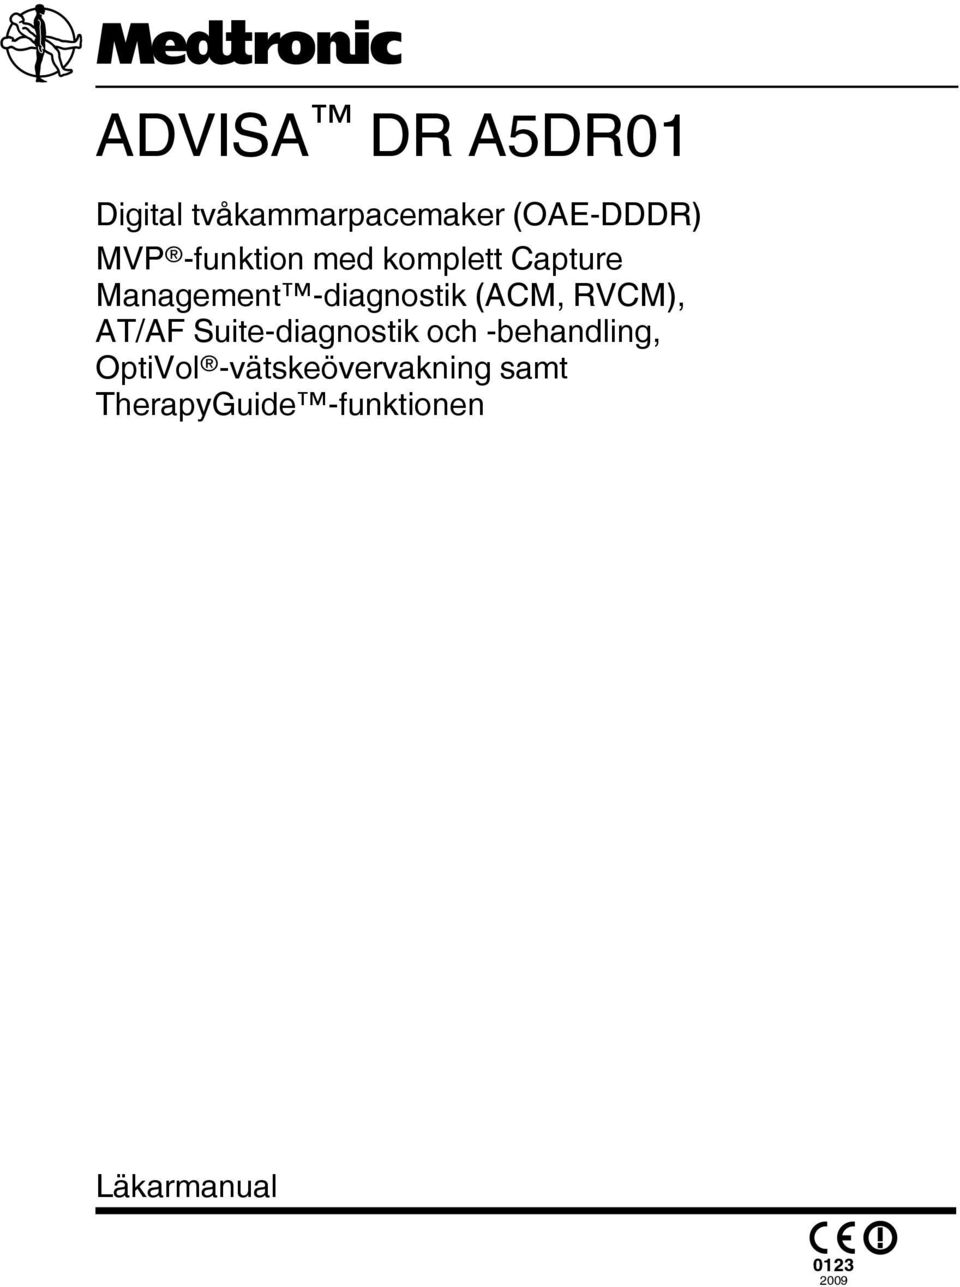 ADVISA DR A5DR01. Läkarmanual - PDF Free Download